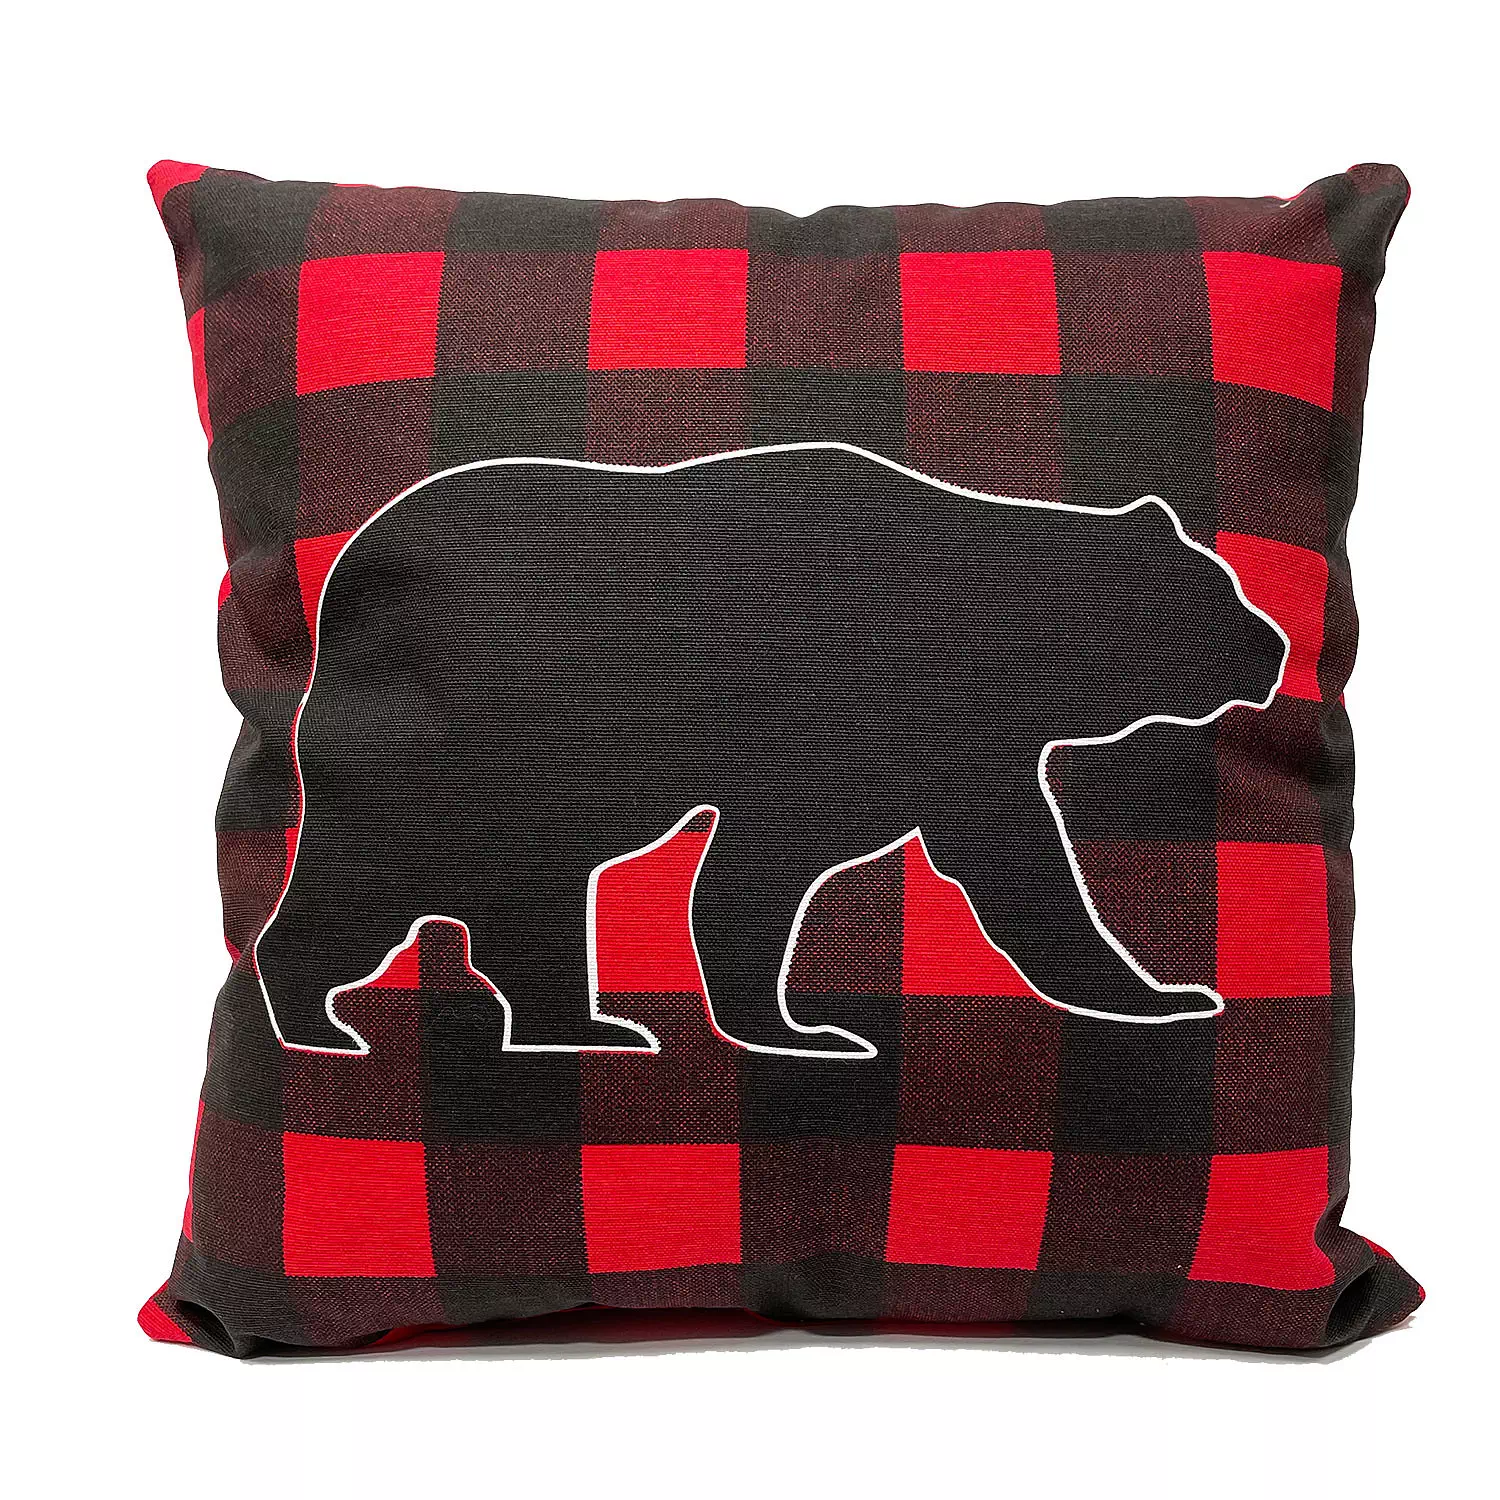 Rustic print decorative cushion, polar bear, 16"x16"